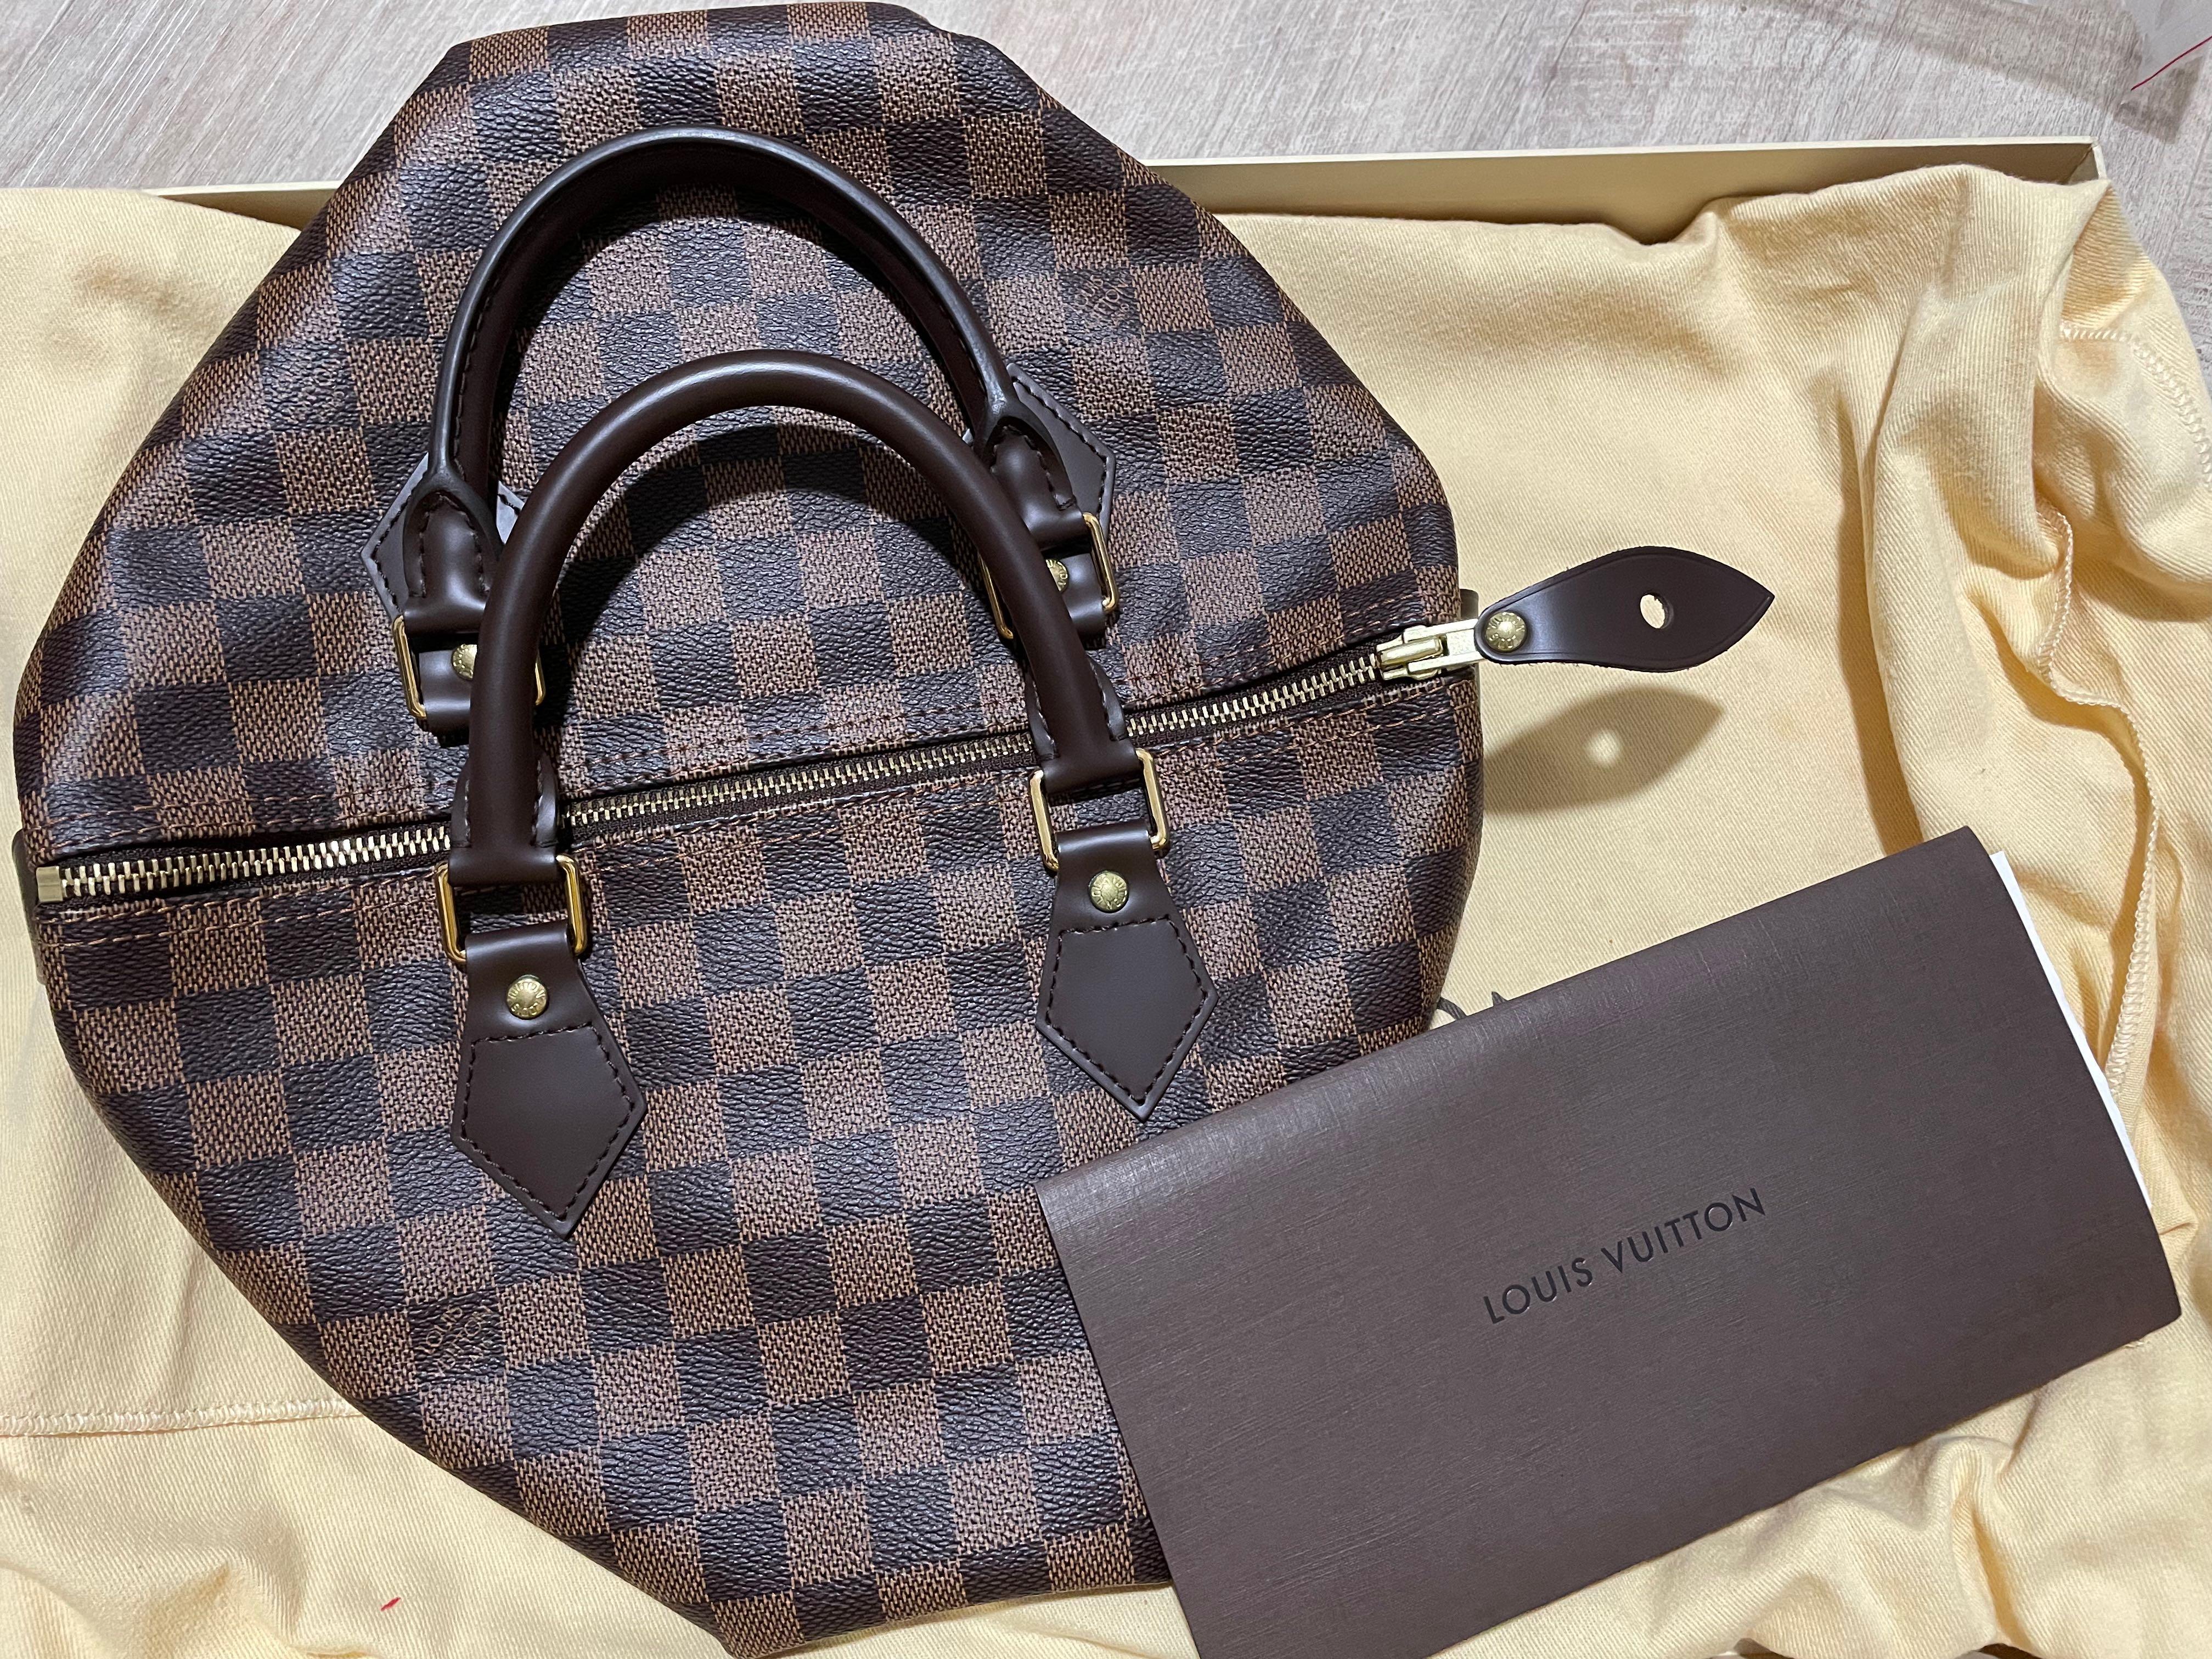 Louis Vuitton Speedy 30 Review + Care Tips + Storage #LouisVuitton